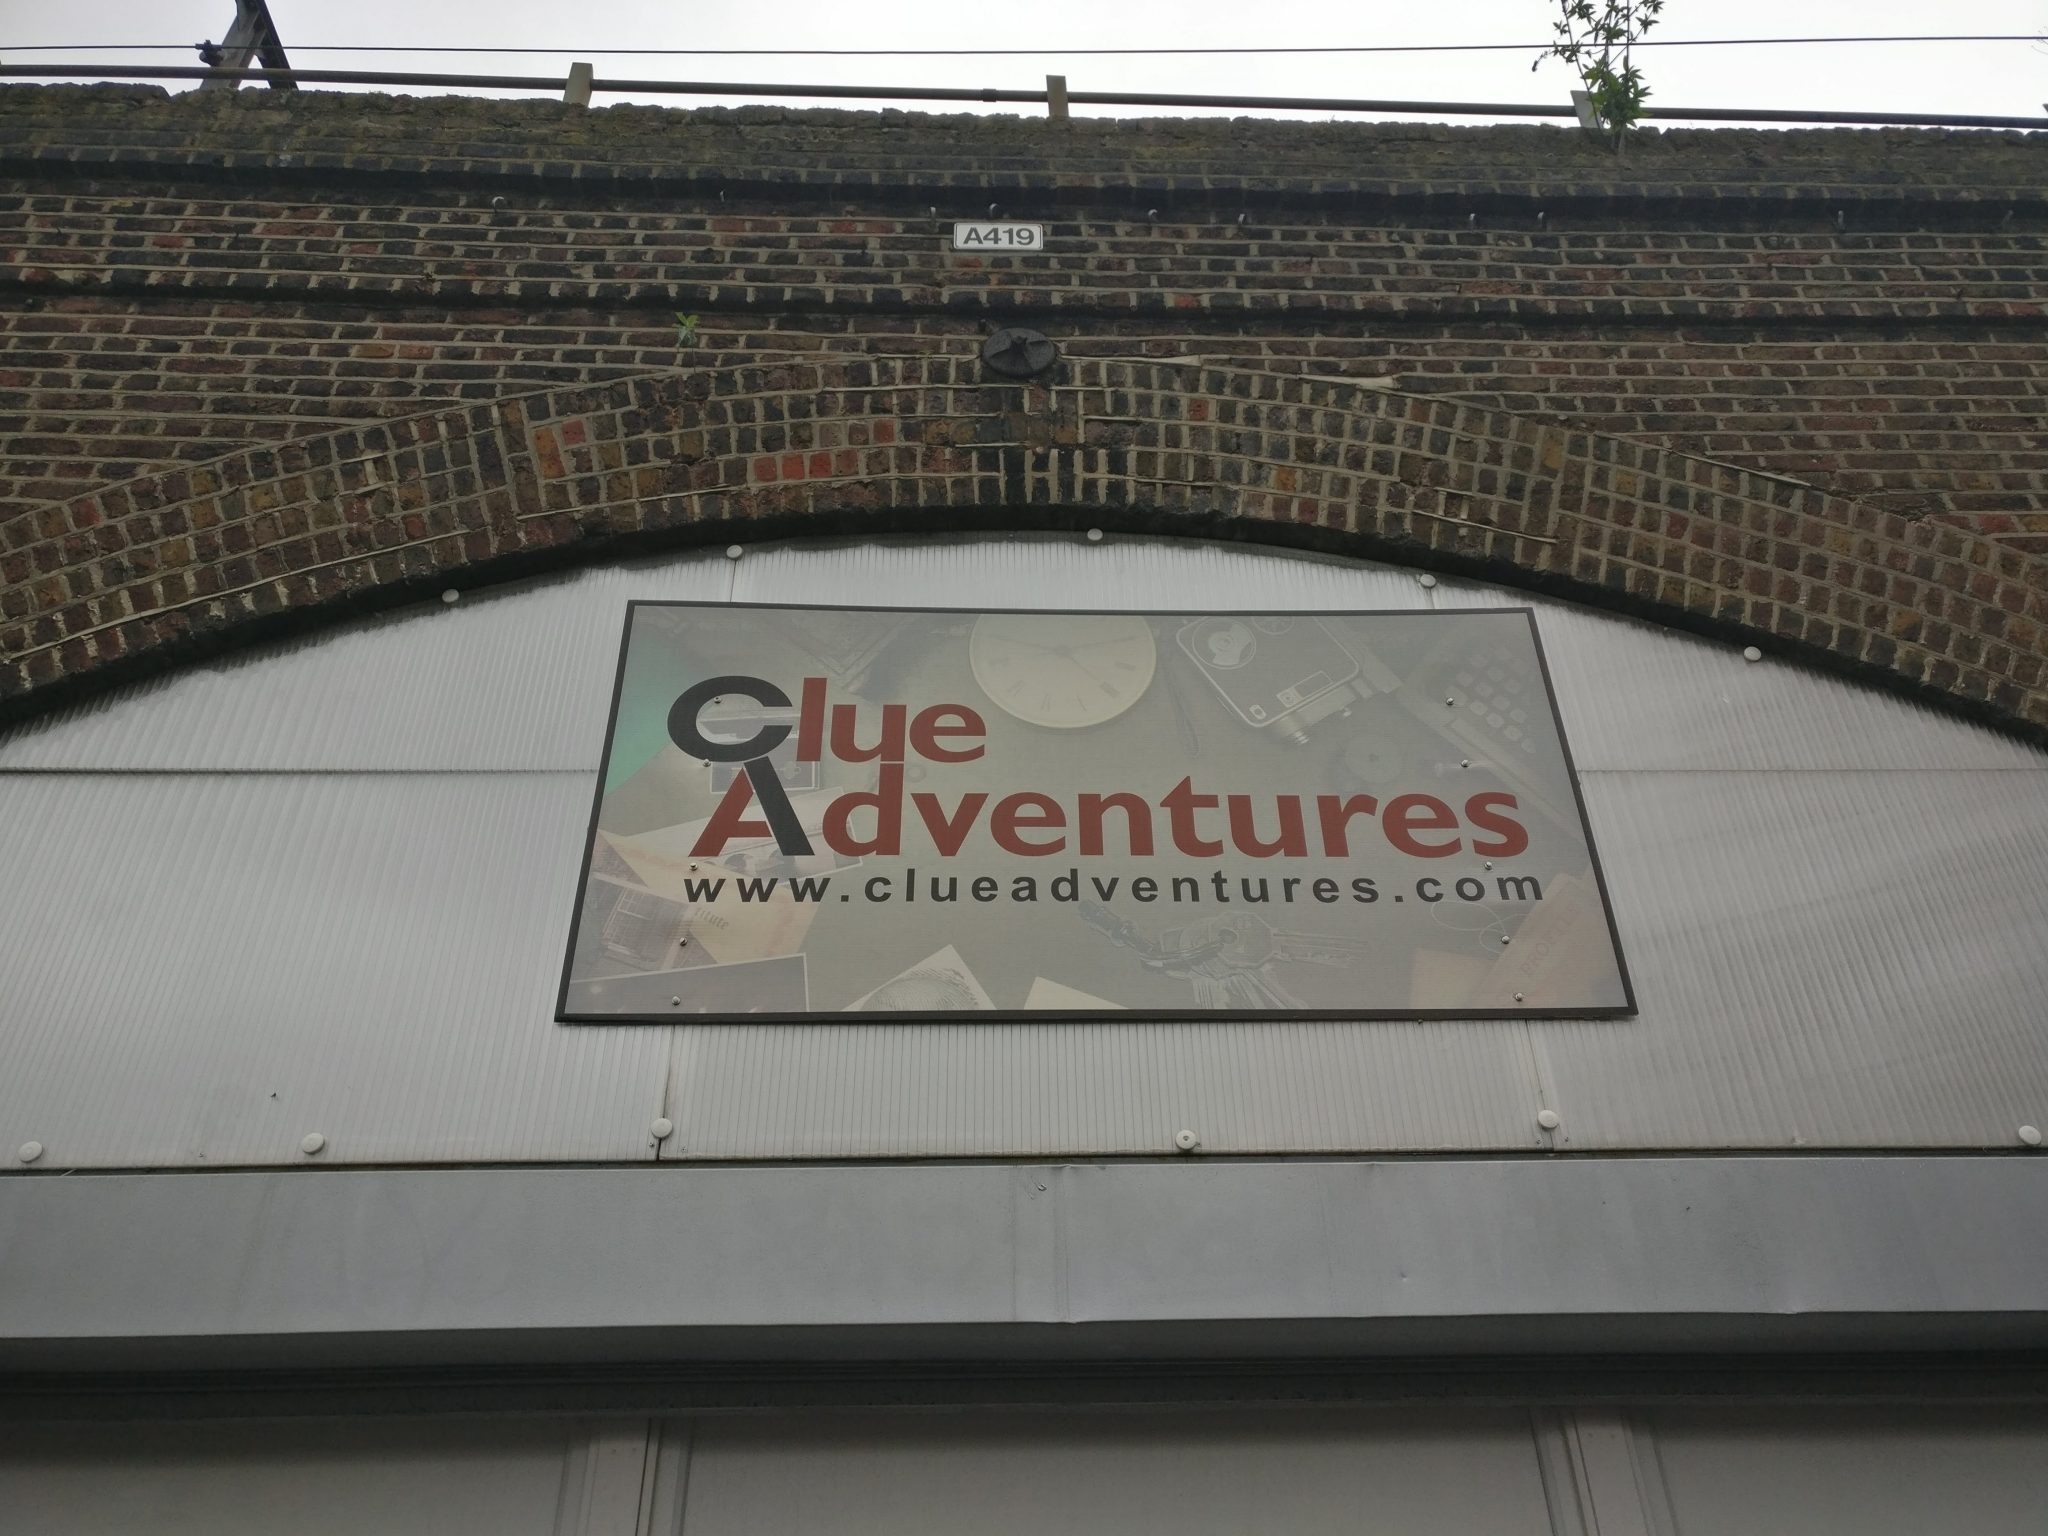 Clue Adventures frontage